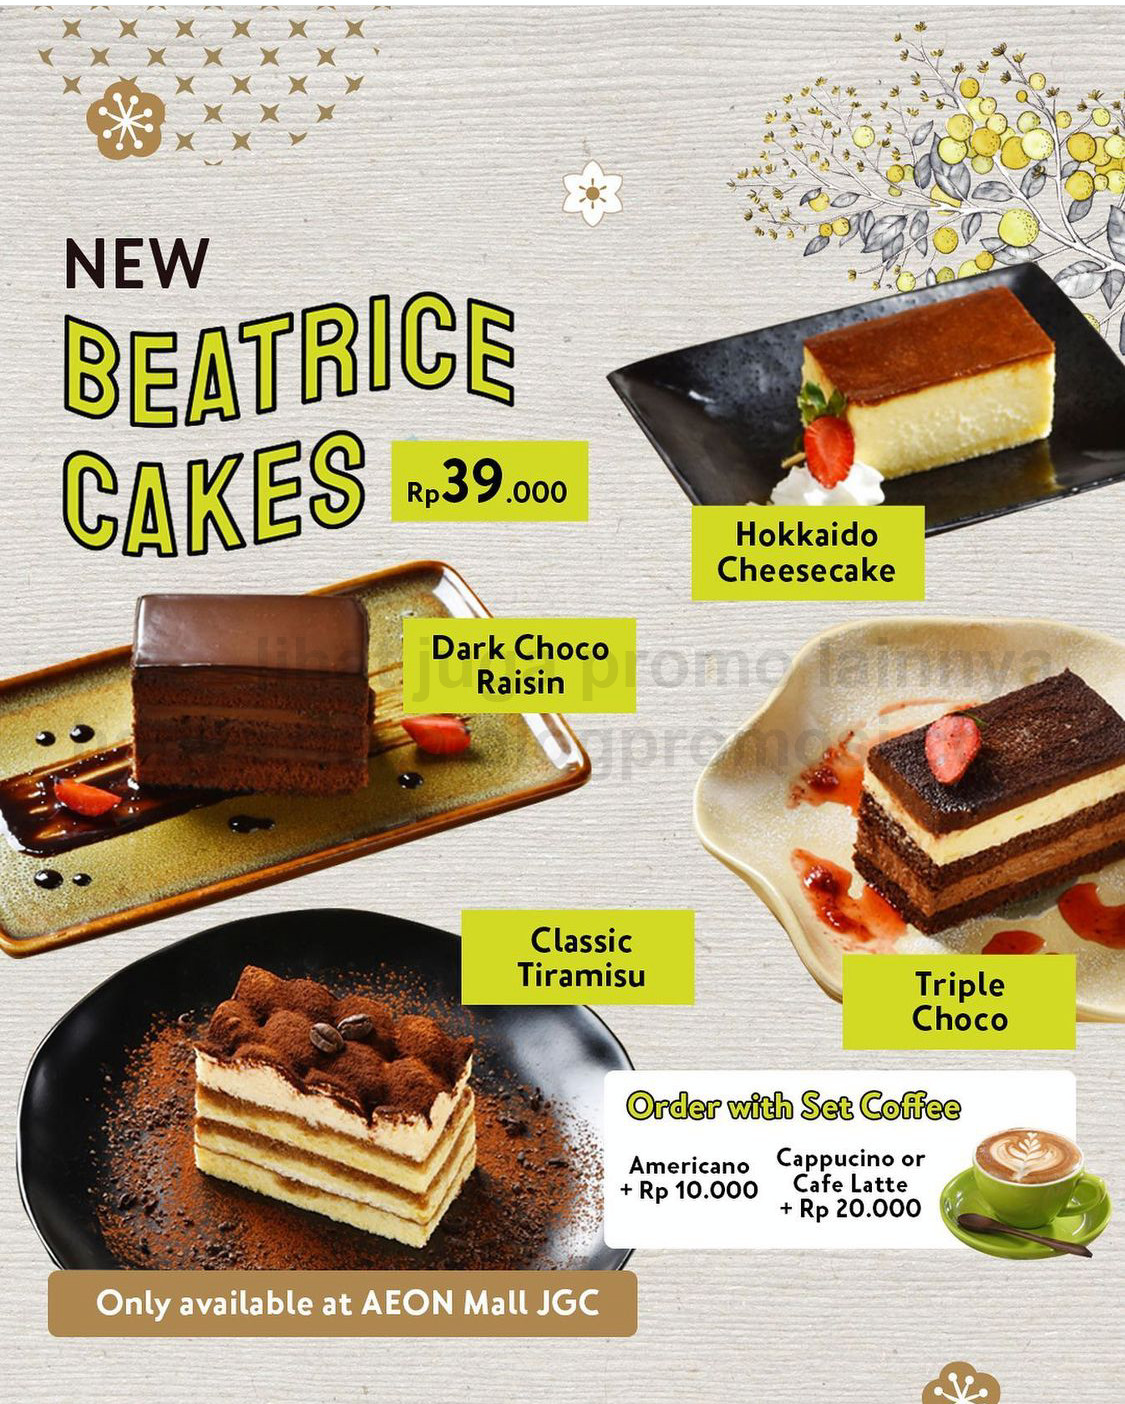 Beartice Quarters Promo BEATRICE CAKES - Harga Spesial Rp. 39.000